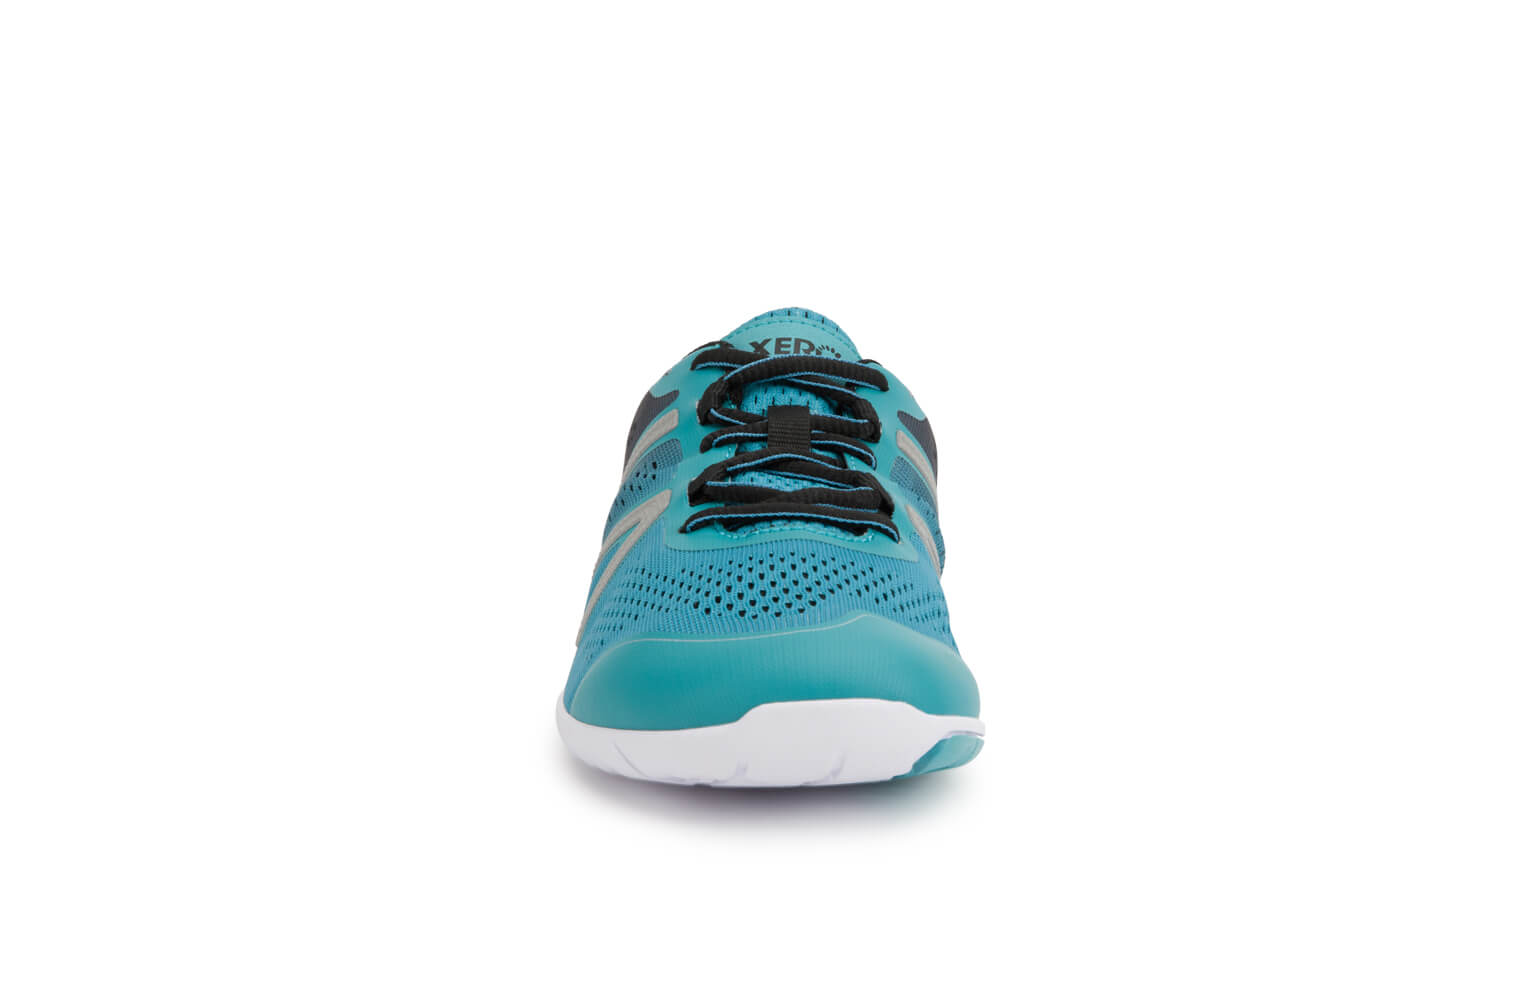 HFS - Barefoot-friendly, Minimalist Women's Road Running Shoe - Xero Shoes